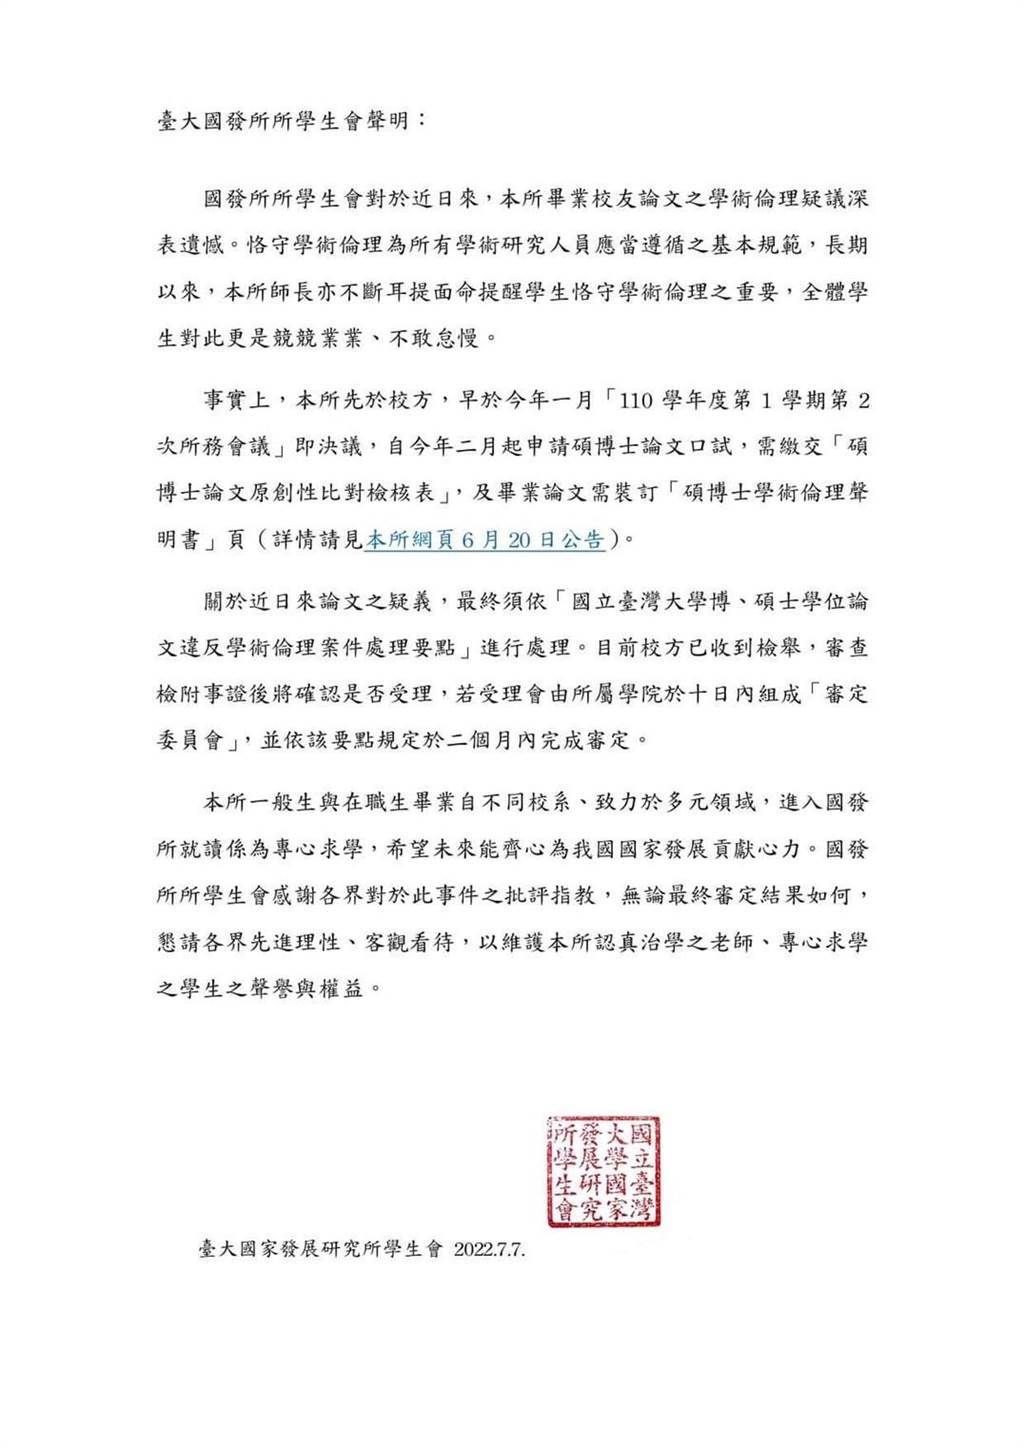 圖https://images.chinatimes.com/newsphoto/2022-07-08/1024/20220708000099.jpg, 國發所學生會切割了